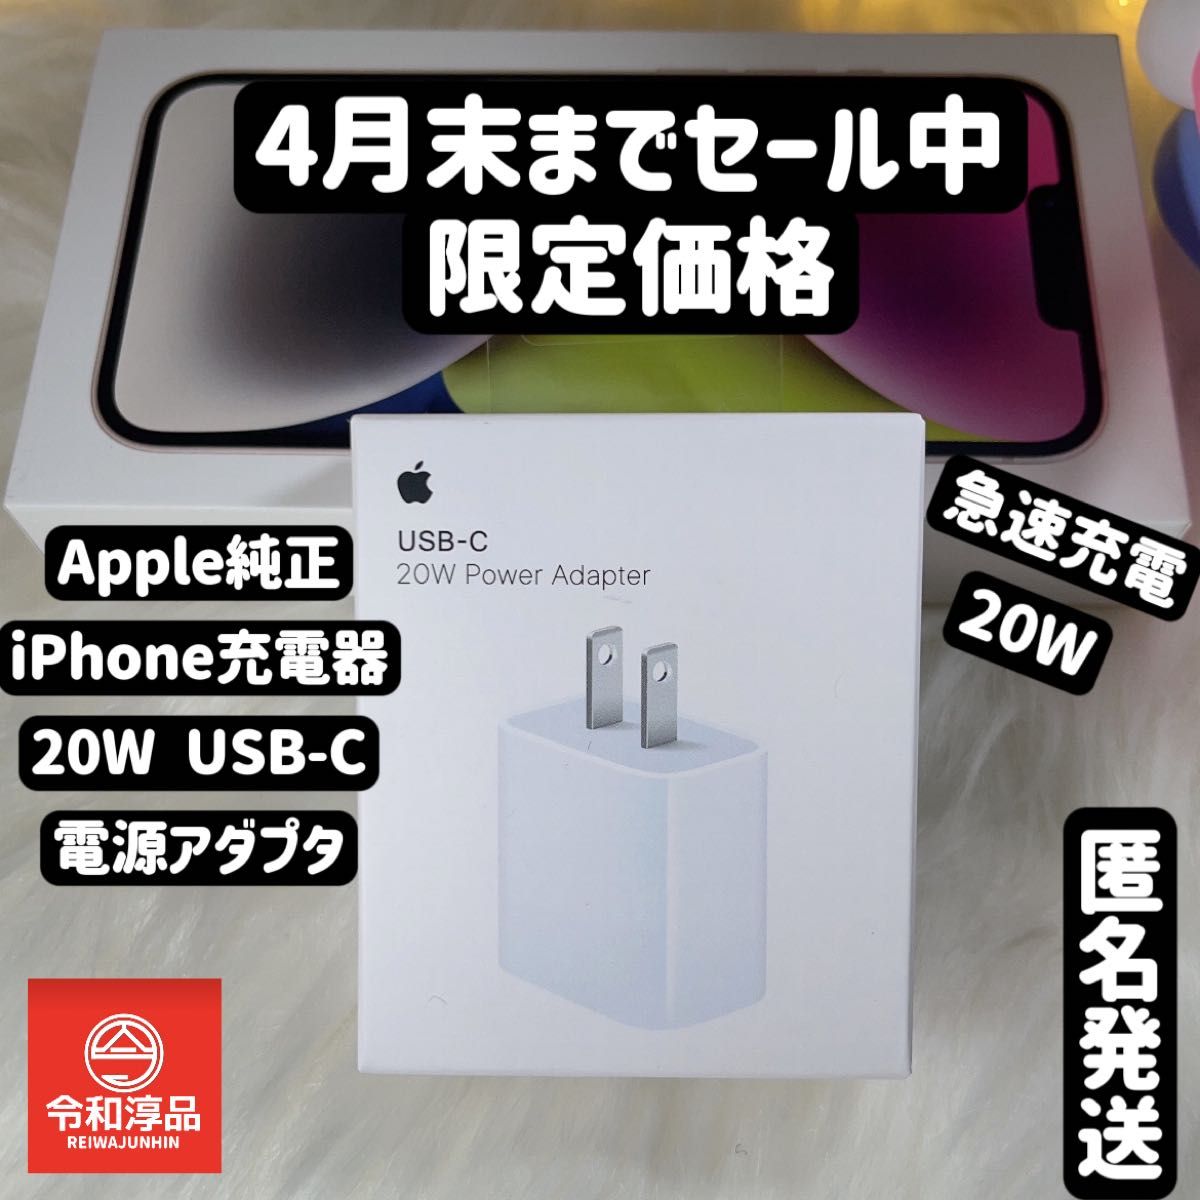 Apple純正iPhone充電器、20W USB-C電源アダプタ